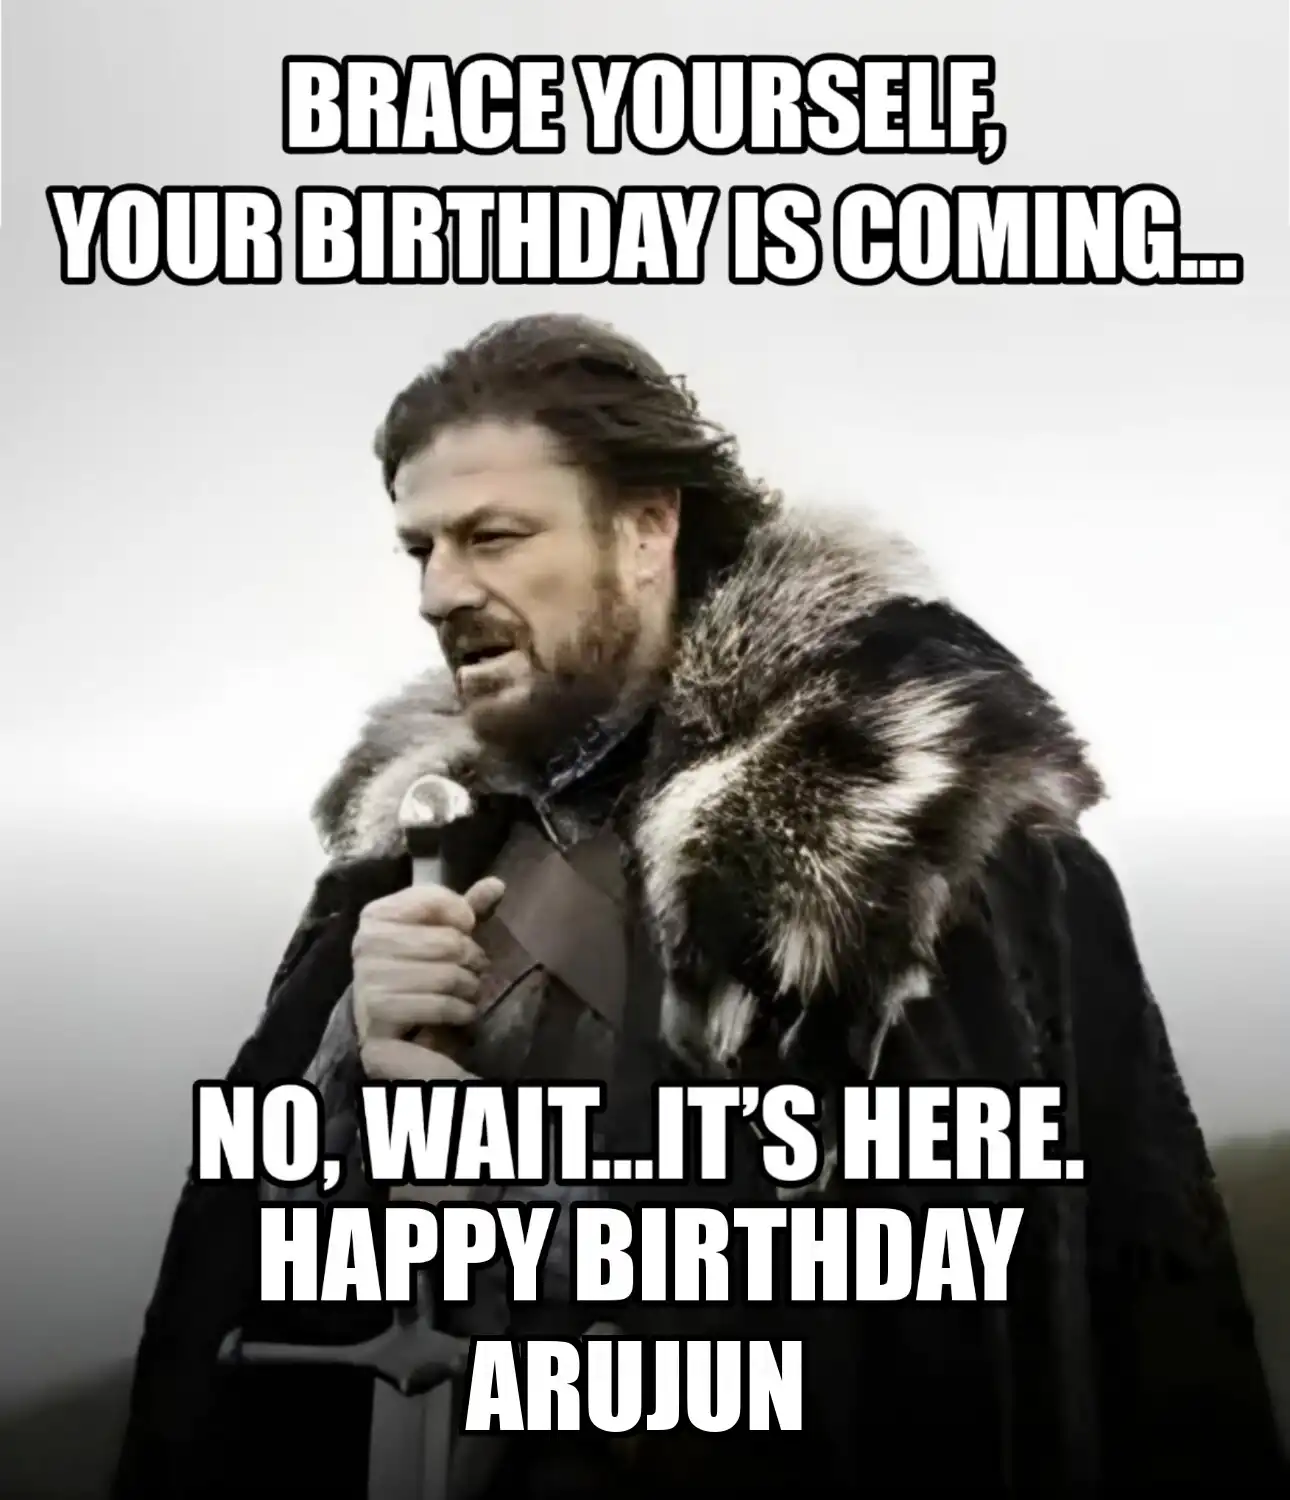 Happy Birthday Arujun Brace Yourself Your Birthday Is Coming Meme